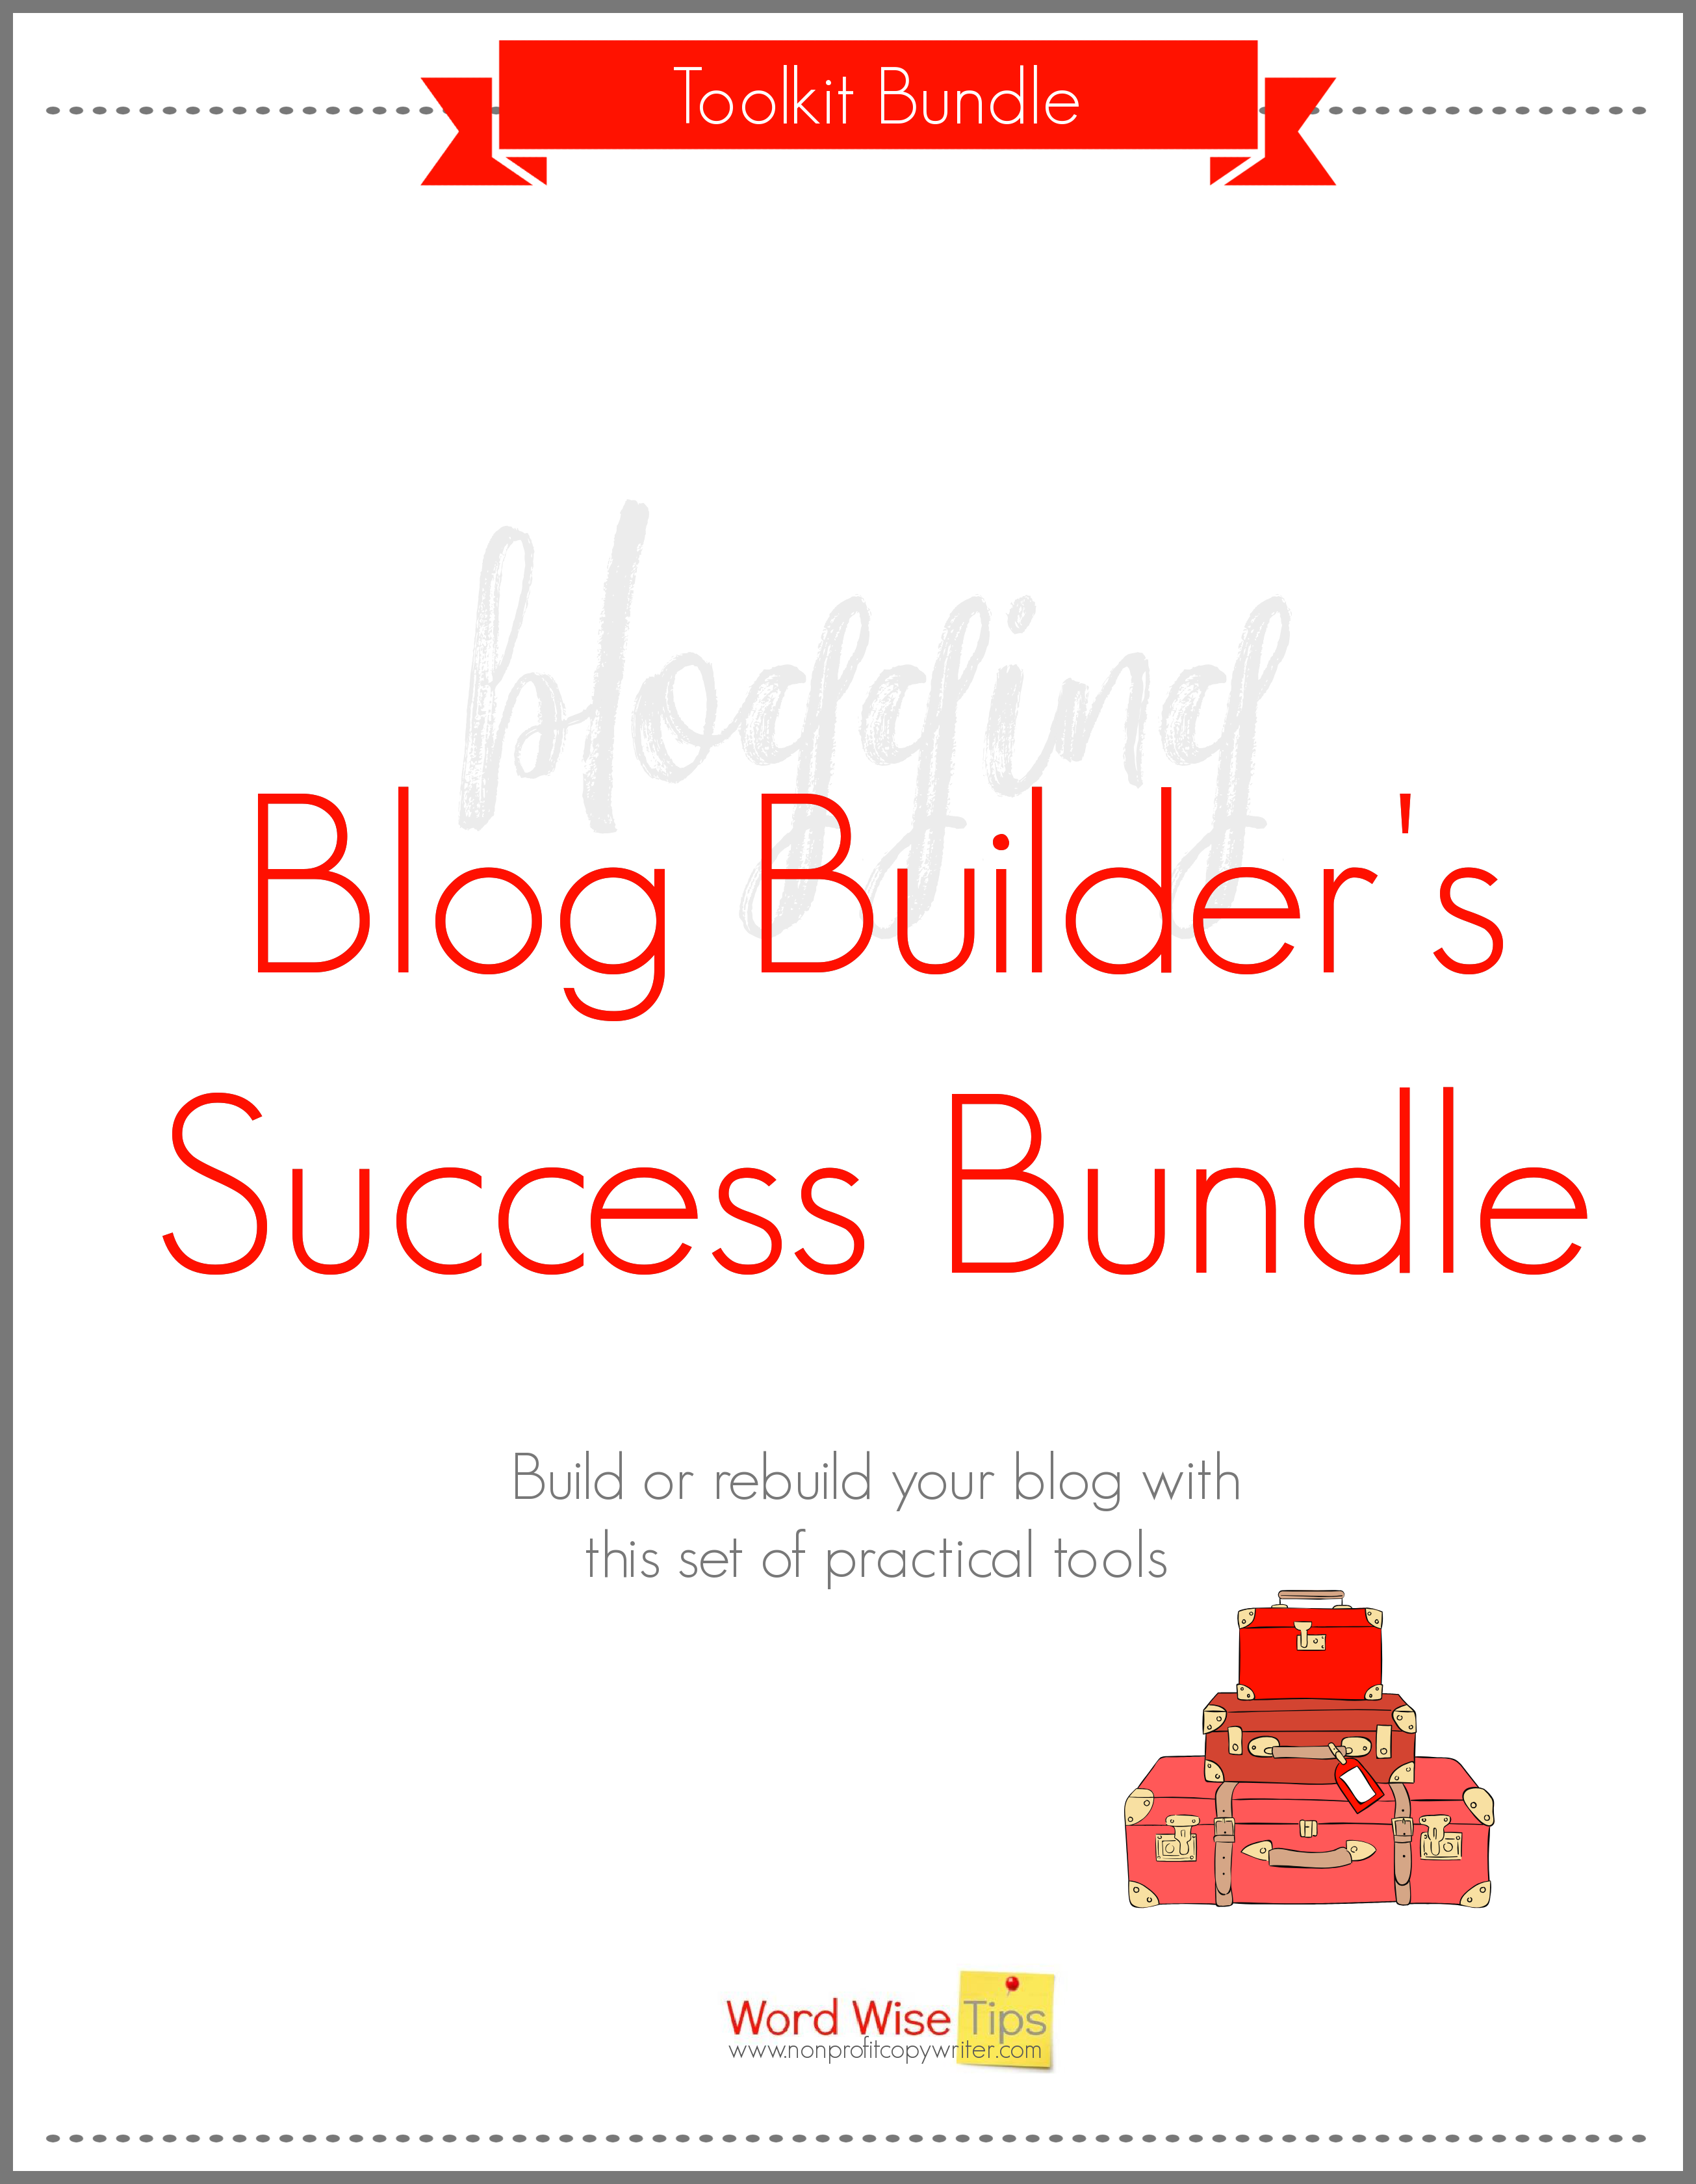 Blog Builder's Success Bundle with Word Wise at Nonprofit Copywriter #Blogging #Printables #WritingTips